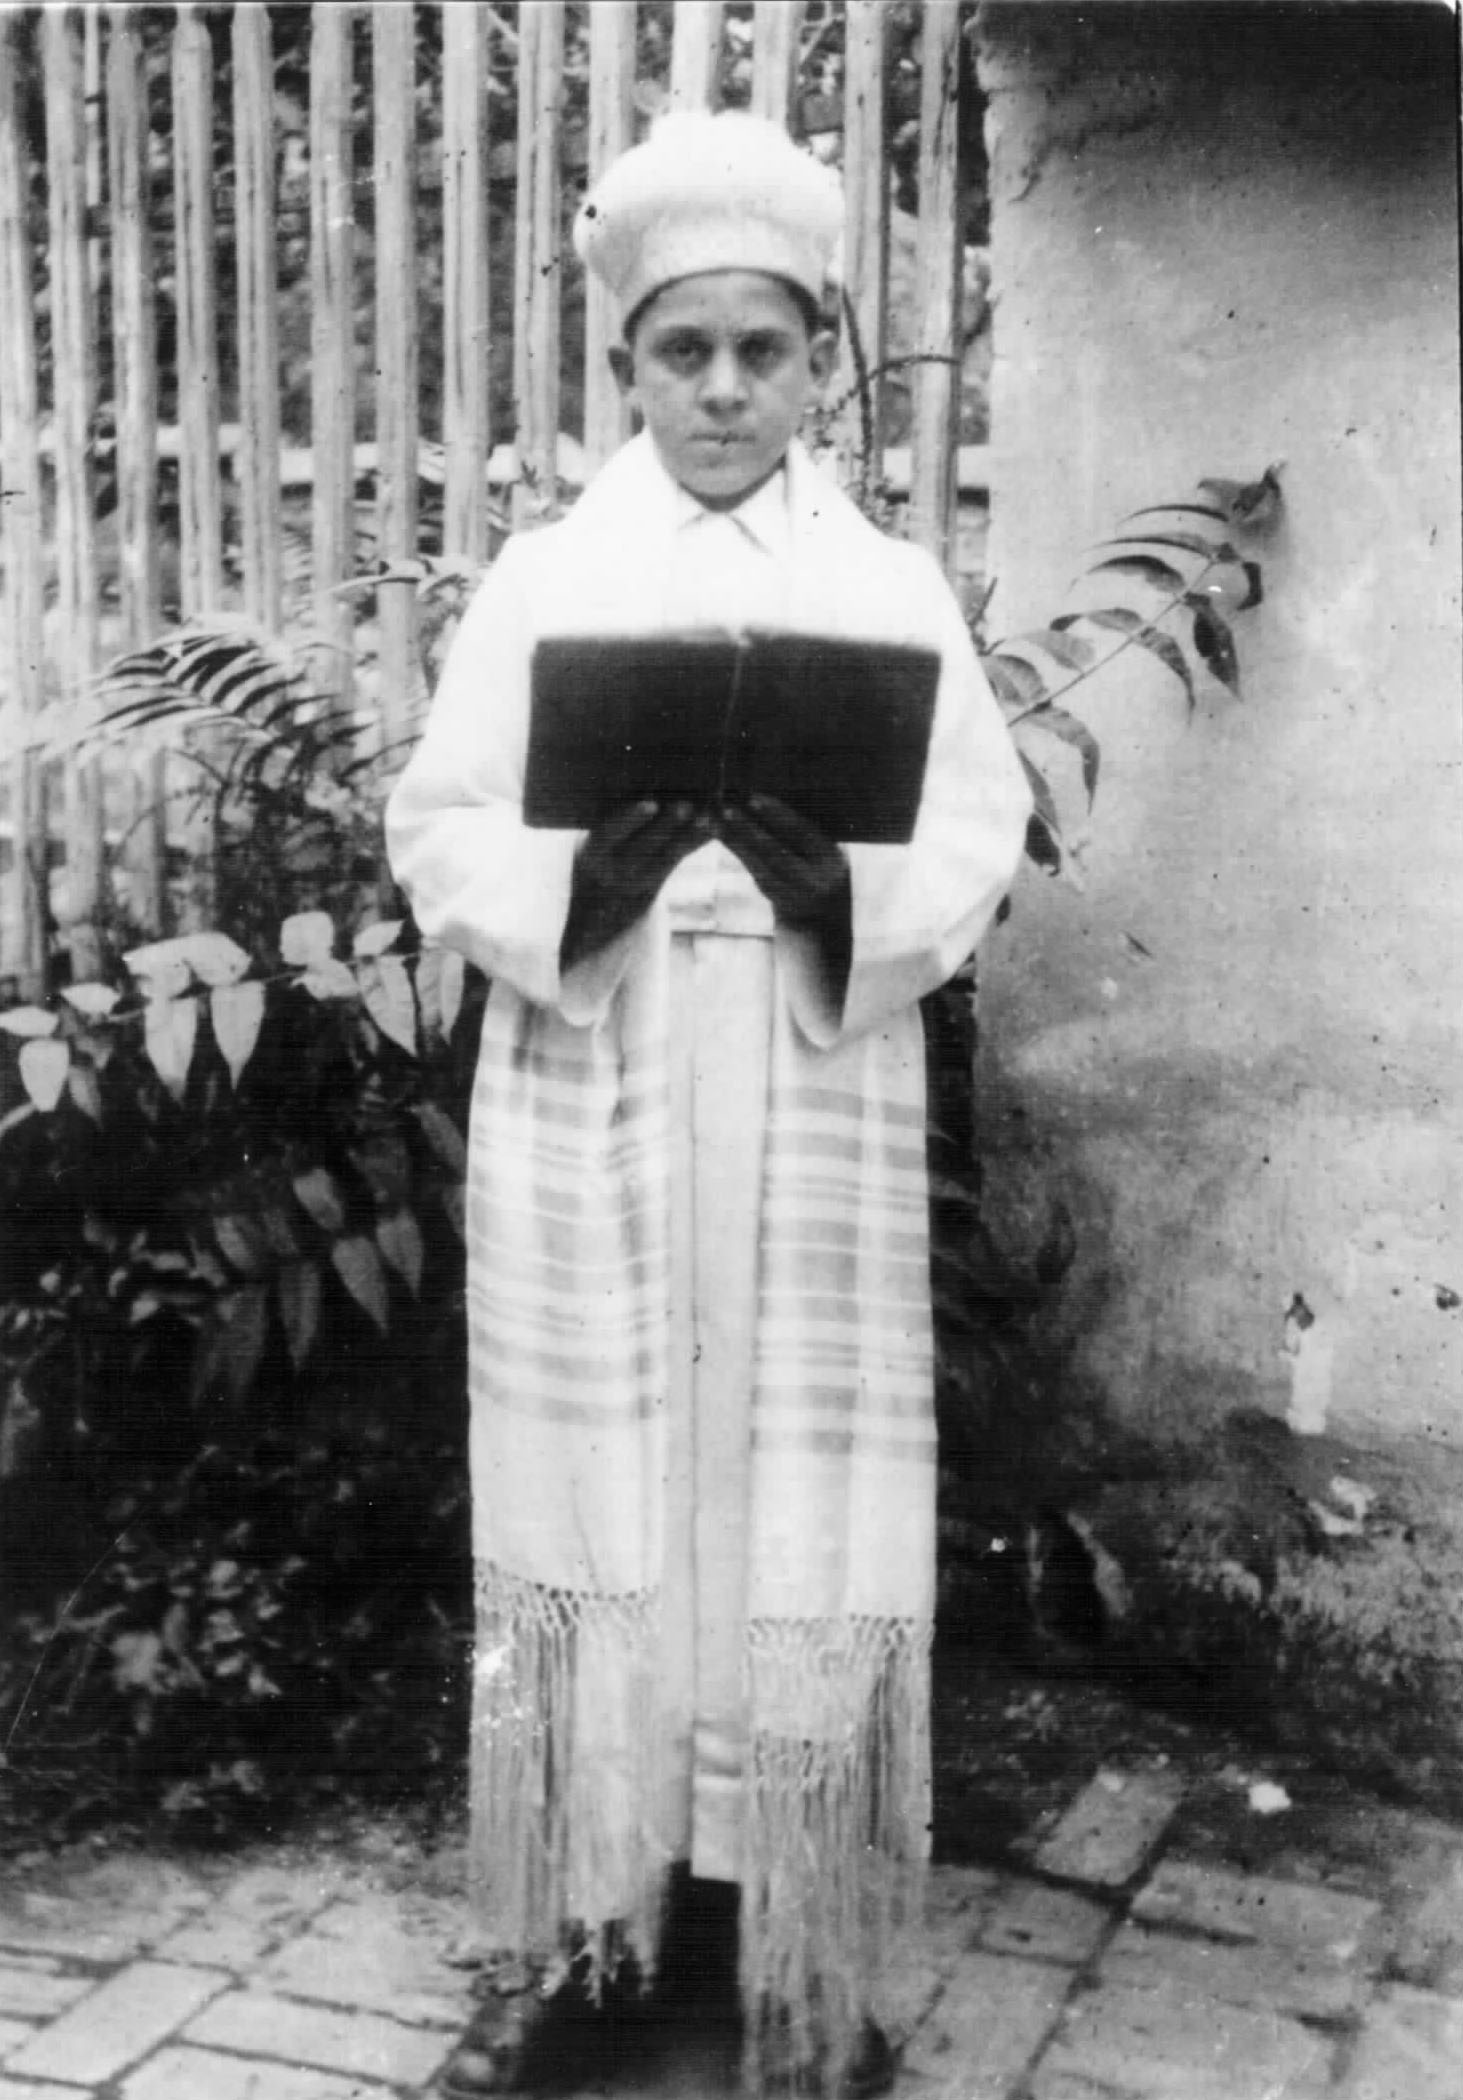 Chaim Raphael as a boy at his Bar Mitzvah in Thessaloniki, Greece, 1937